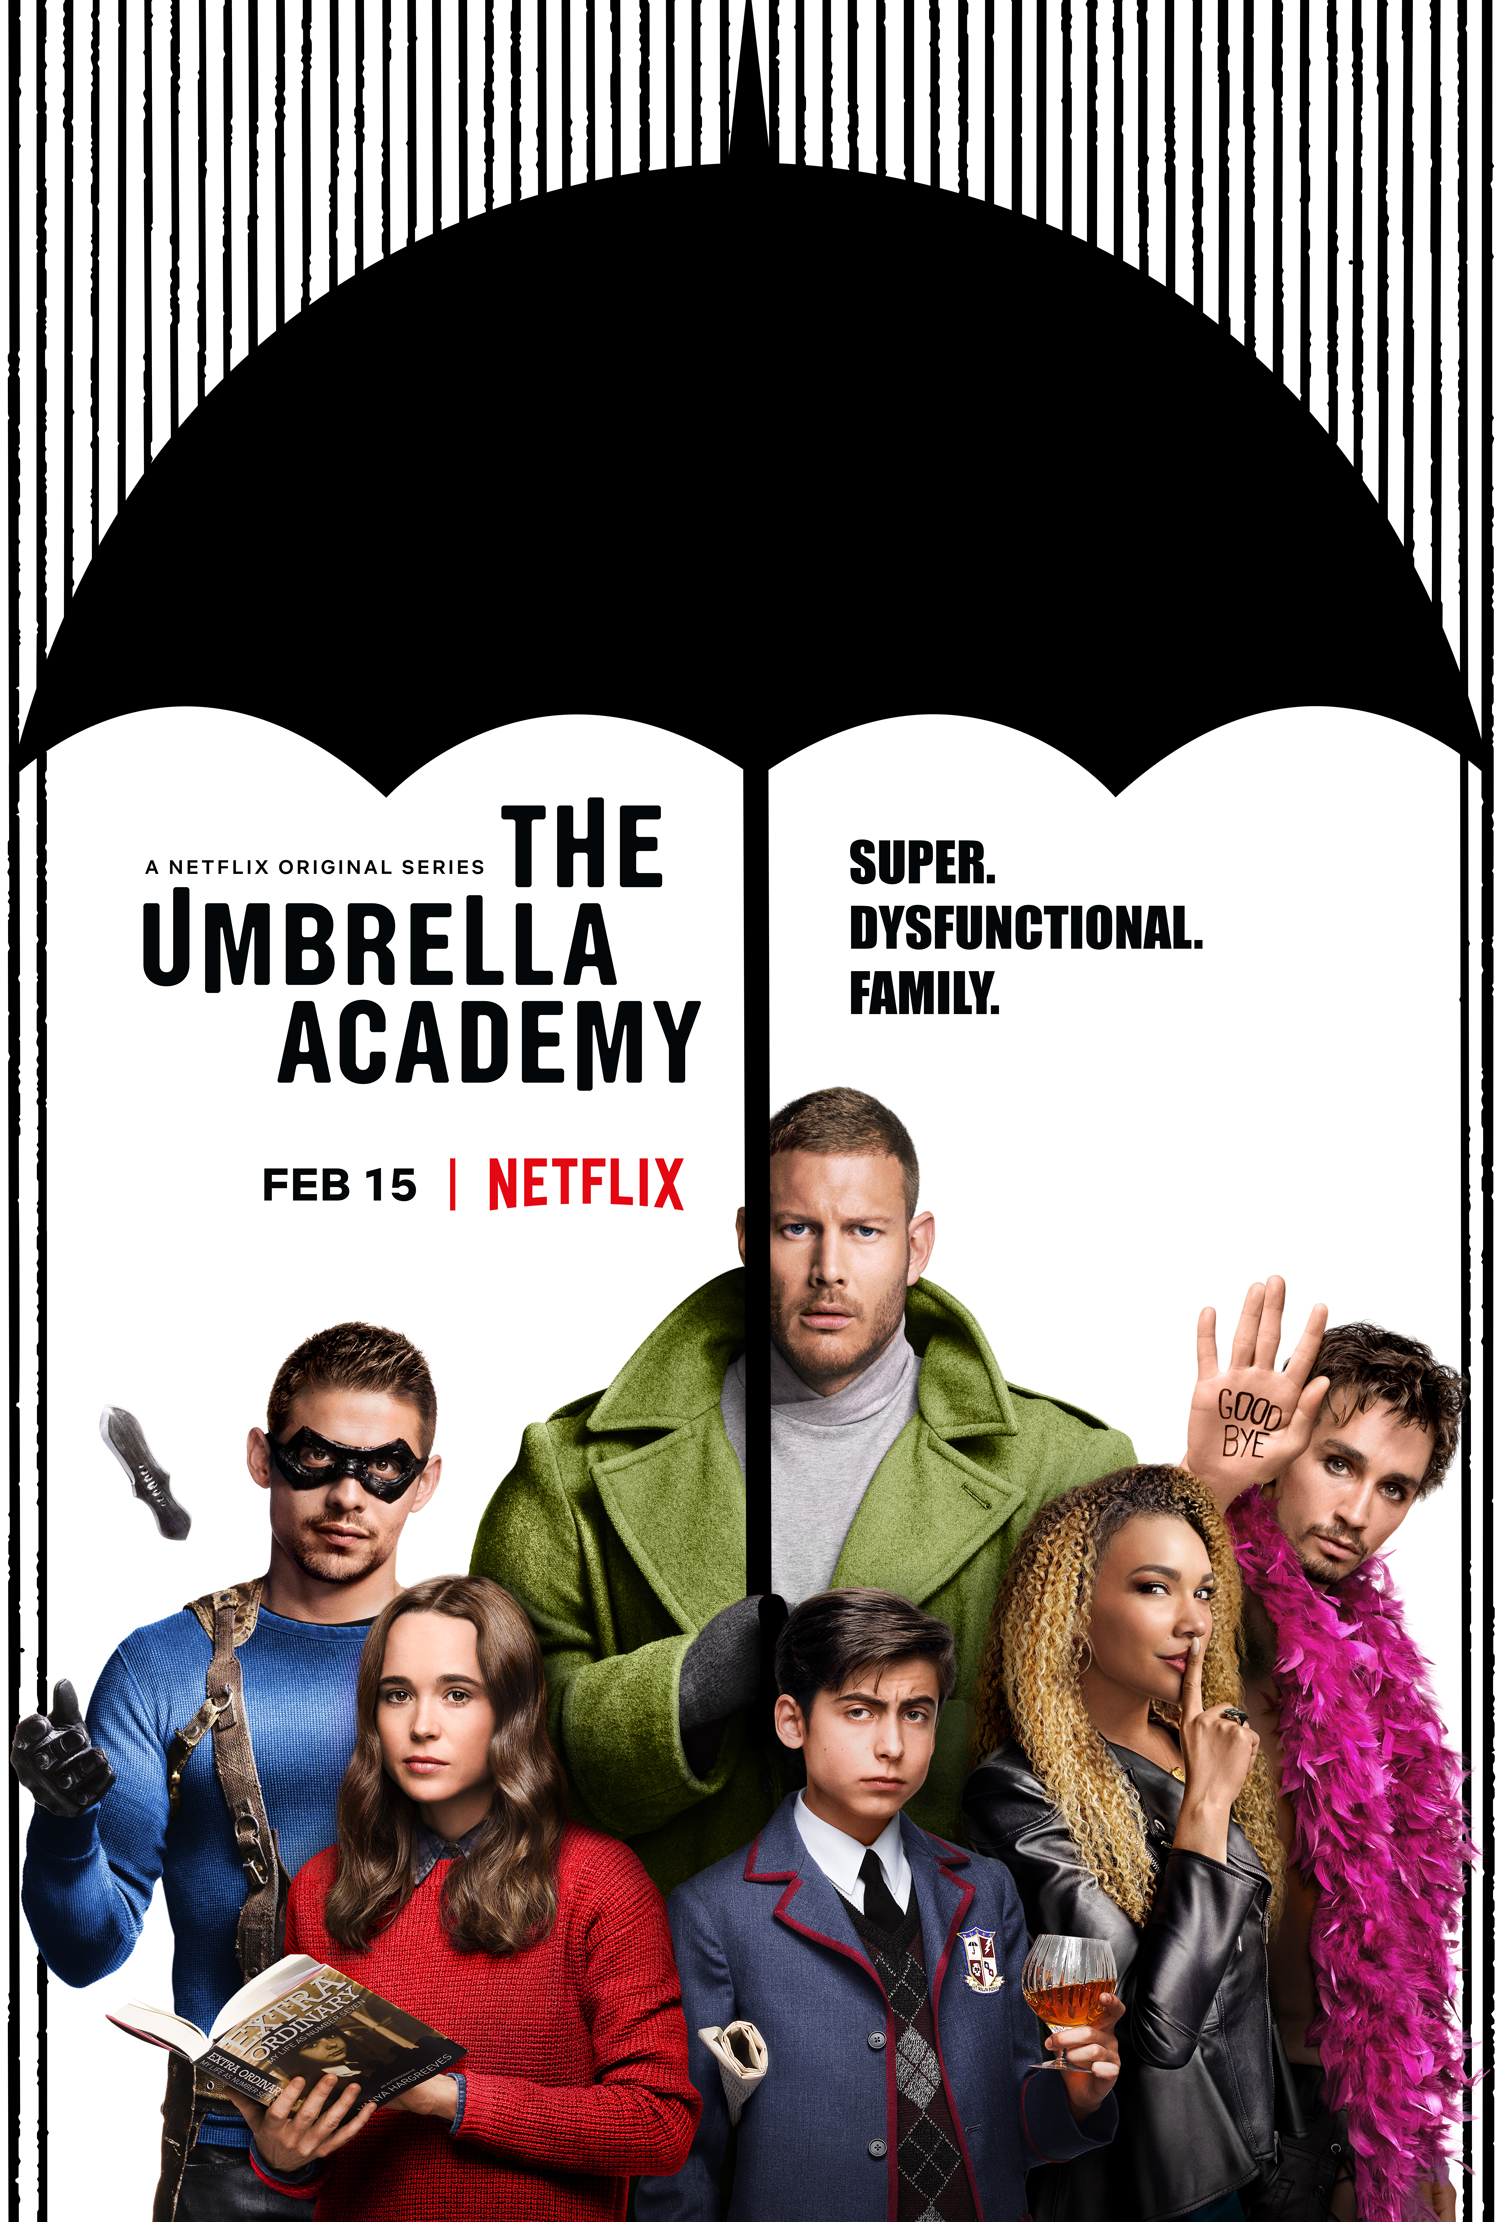 The Halloween-themed Umbrella Academy poster.